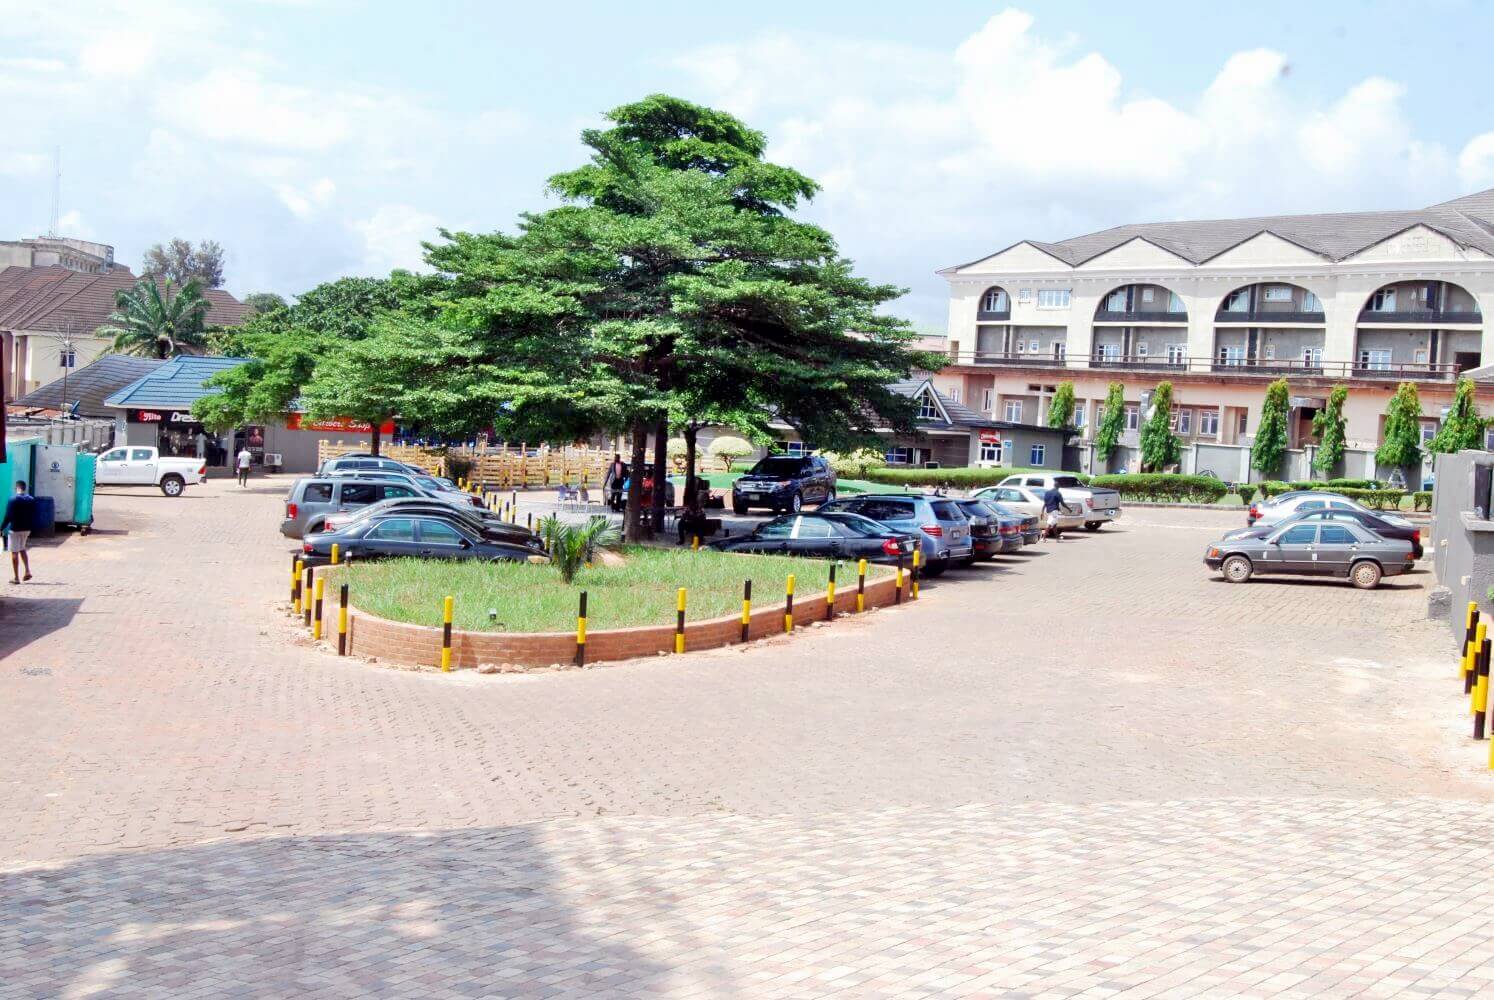 Villa Toscana Hotels, Best Hotel in Enugu